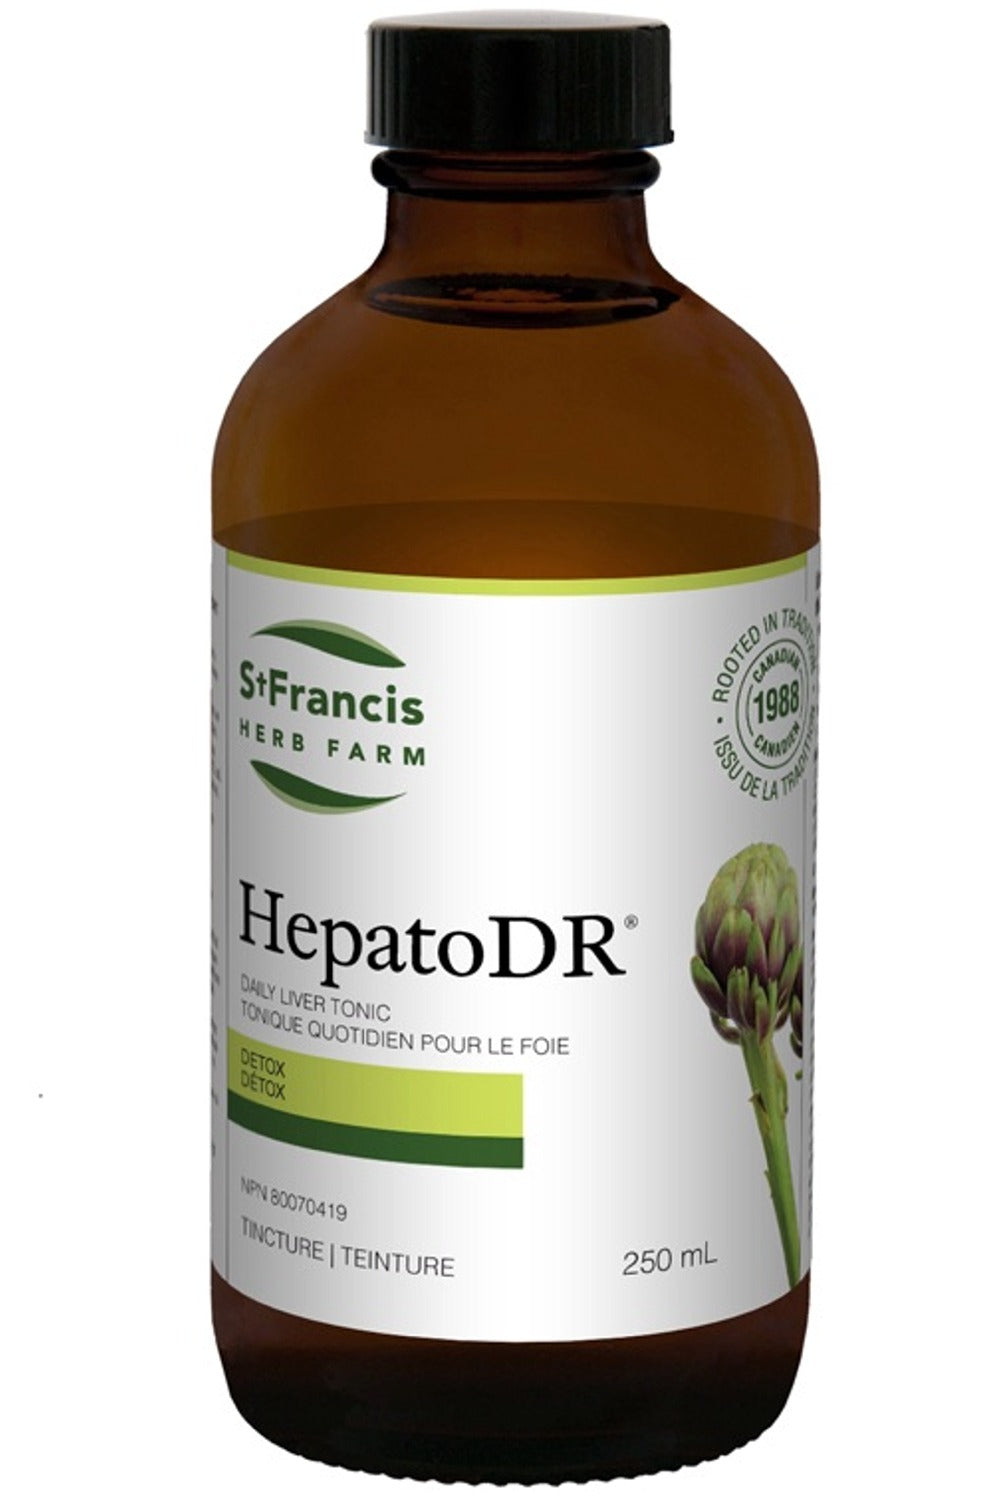 ST FRANCIS HERB FARM HepatoDR (250 ml)